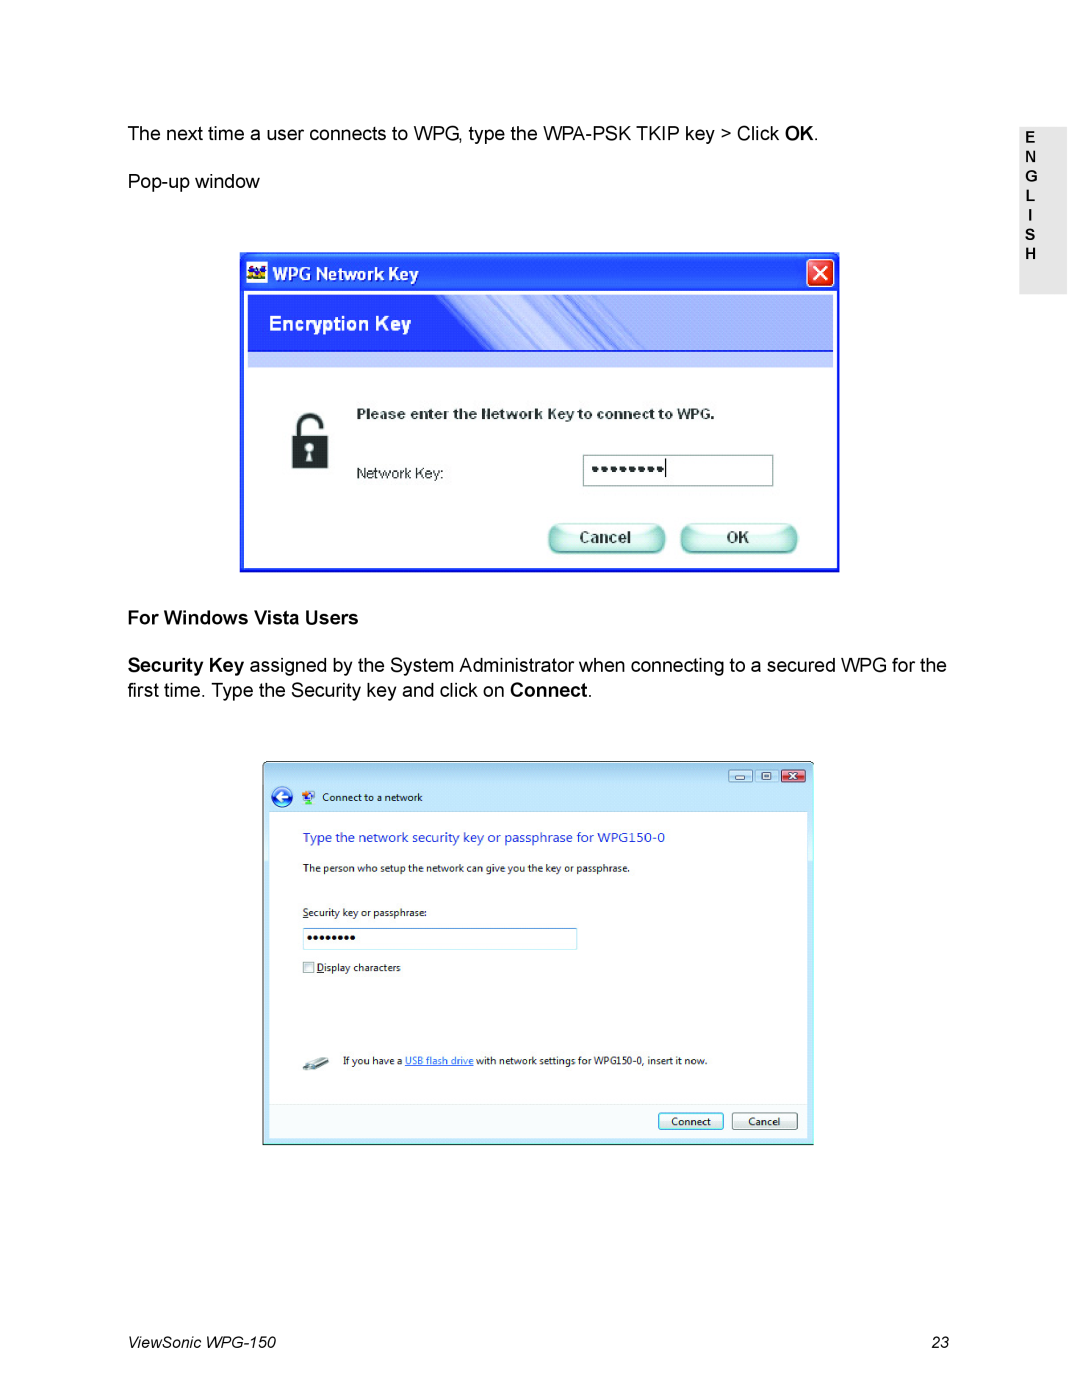 ViewSonic WPG-150 manual For Windows Vista Users 